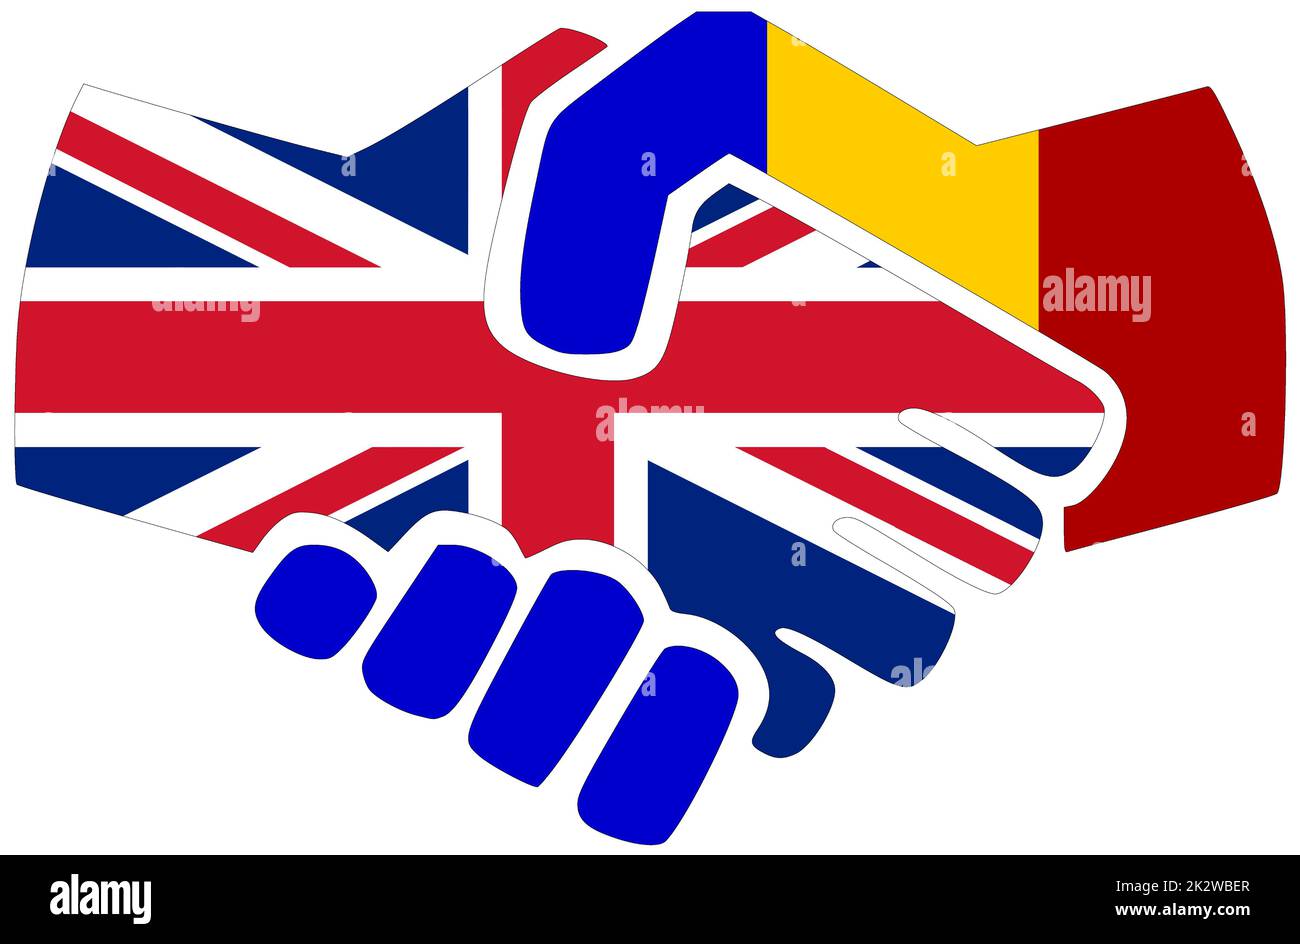 UK - Romania : Handshake, symbol of agreement or friendship Stock Photo